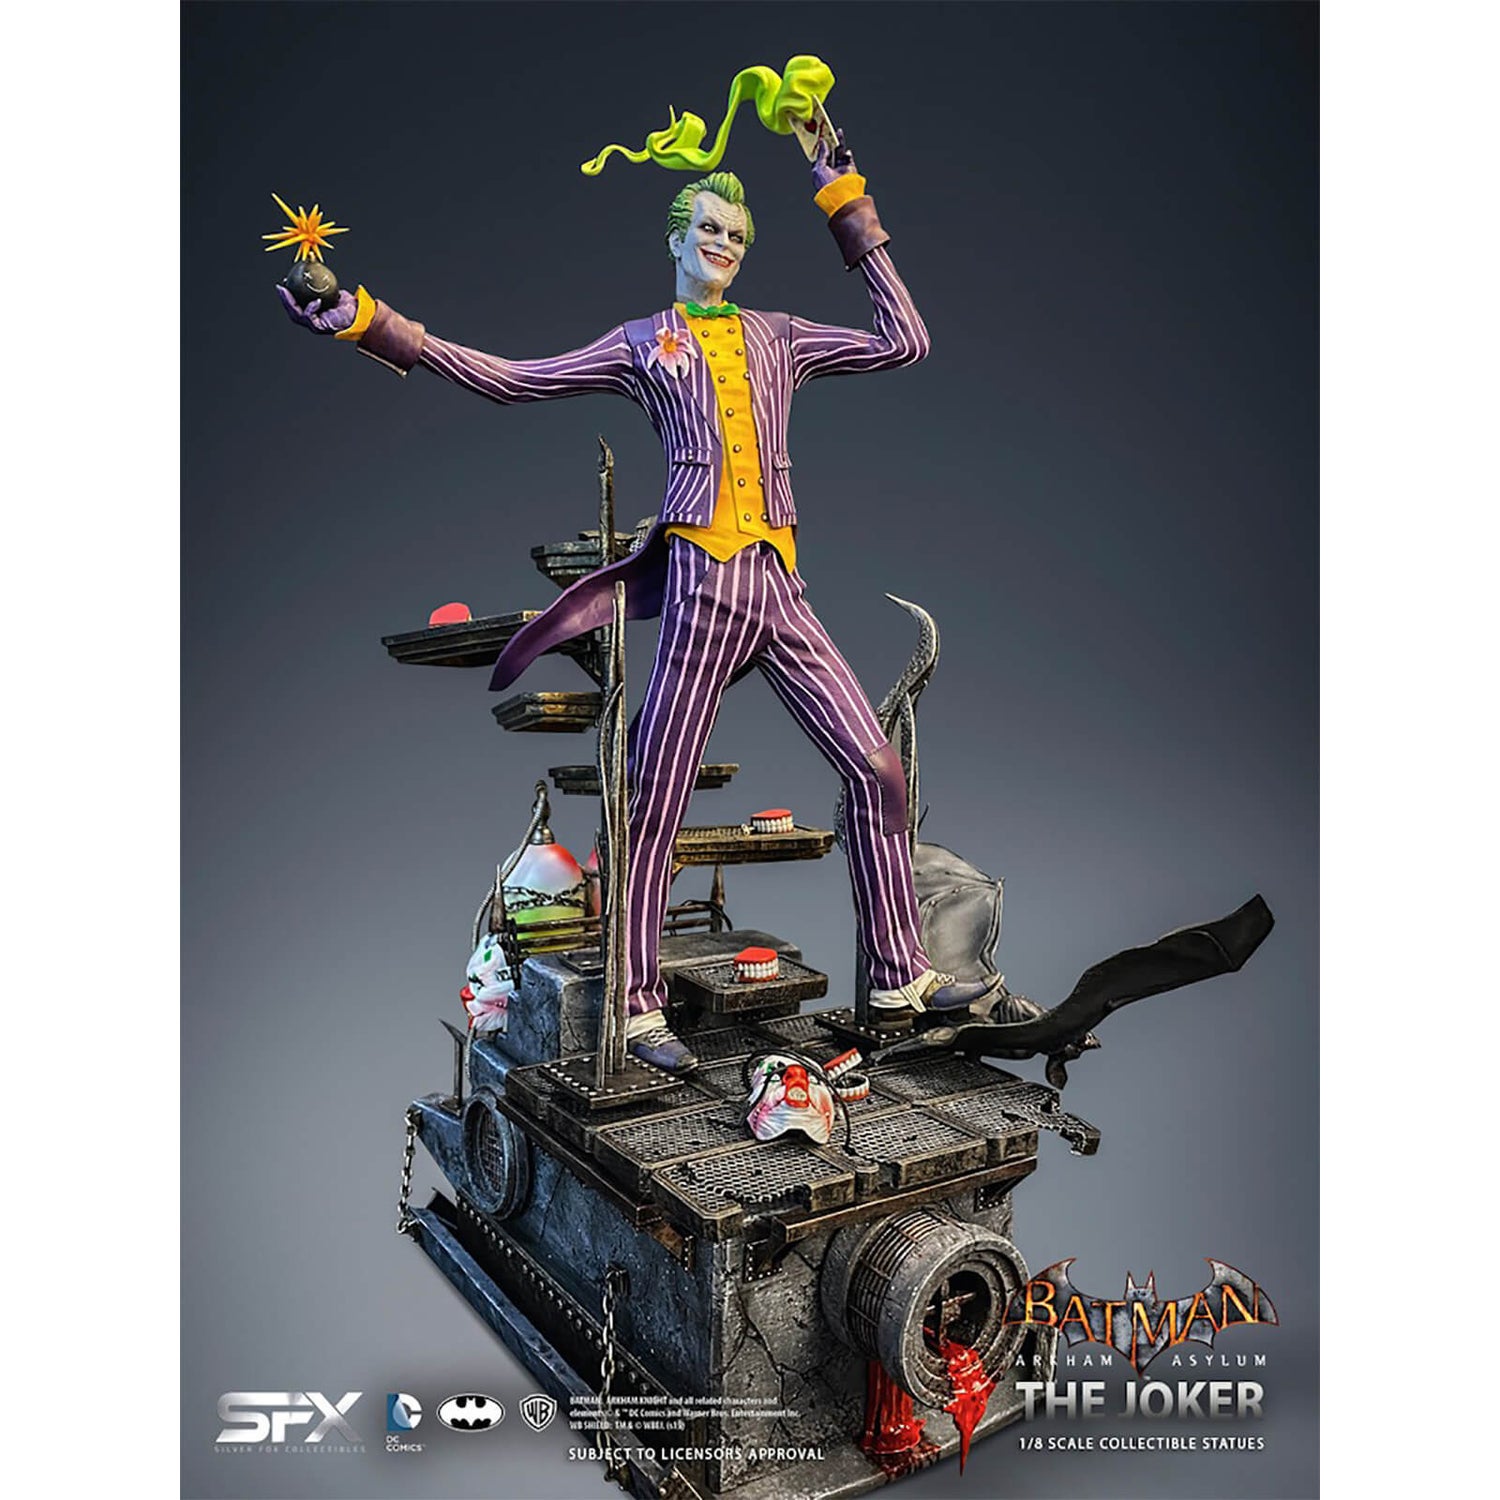 Silver Fox Collectibles Batman Arkham Knight Joker Figur im Maßstab 1:8